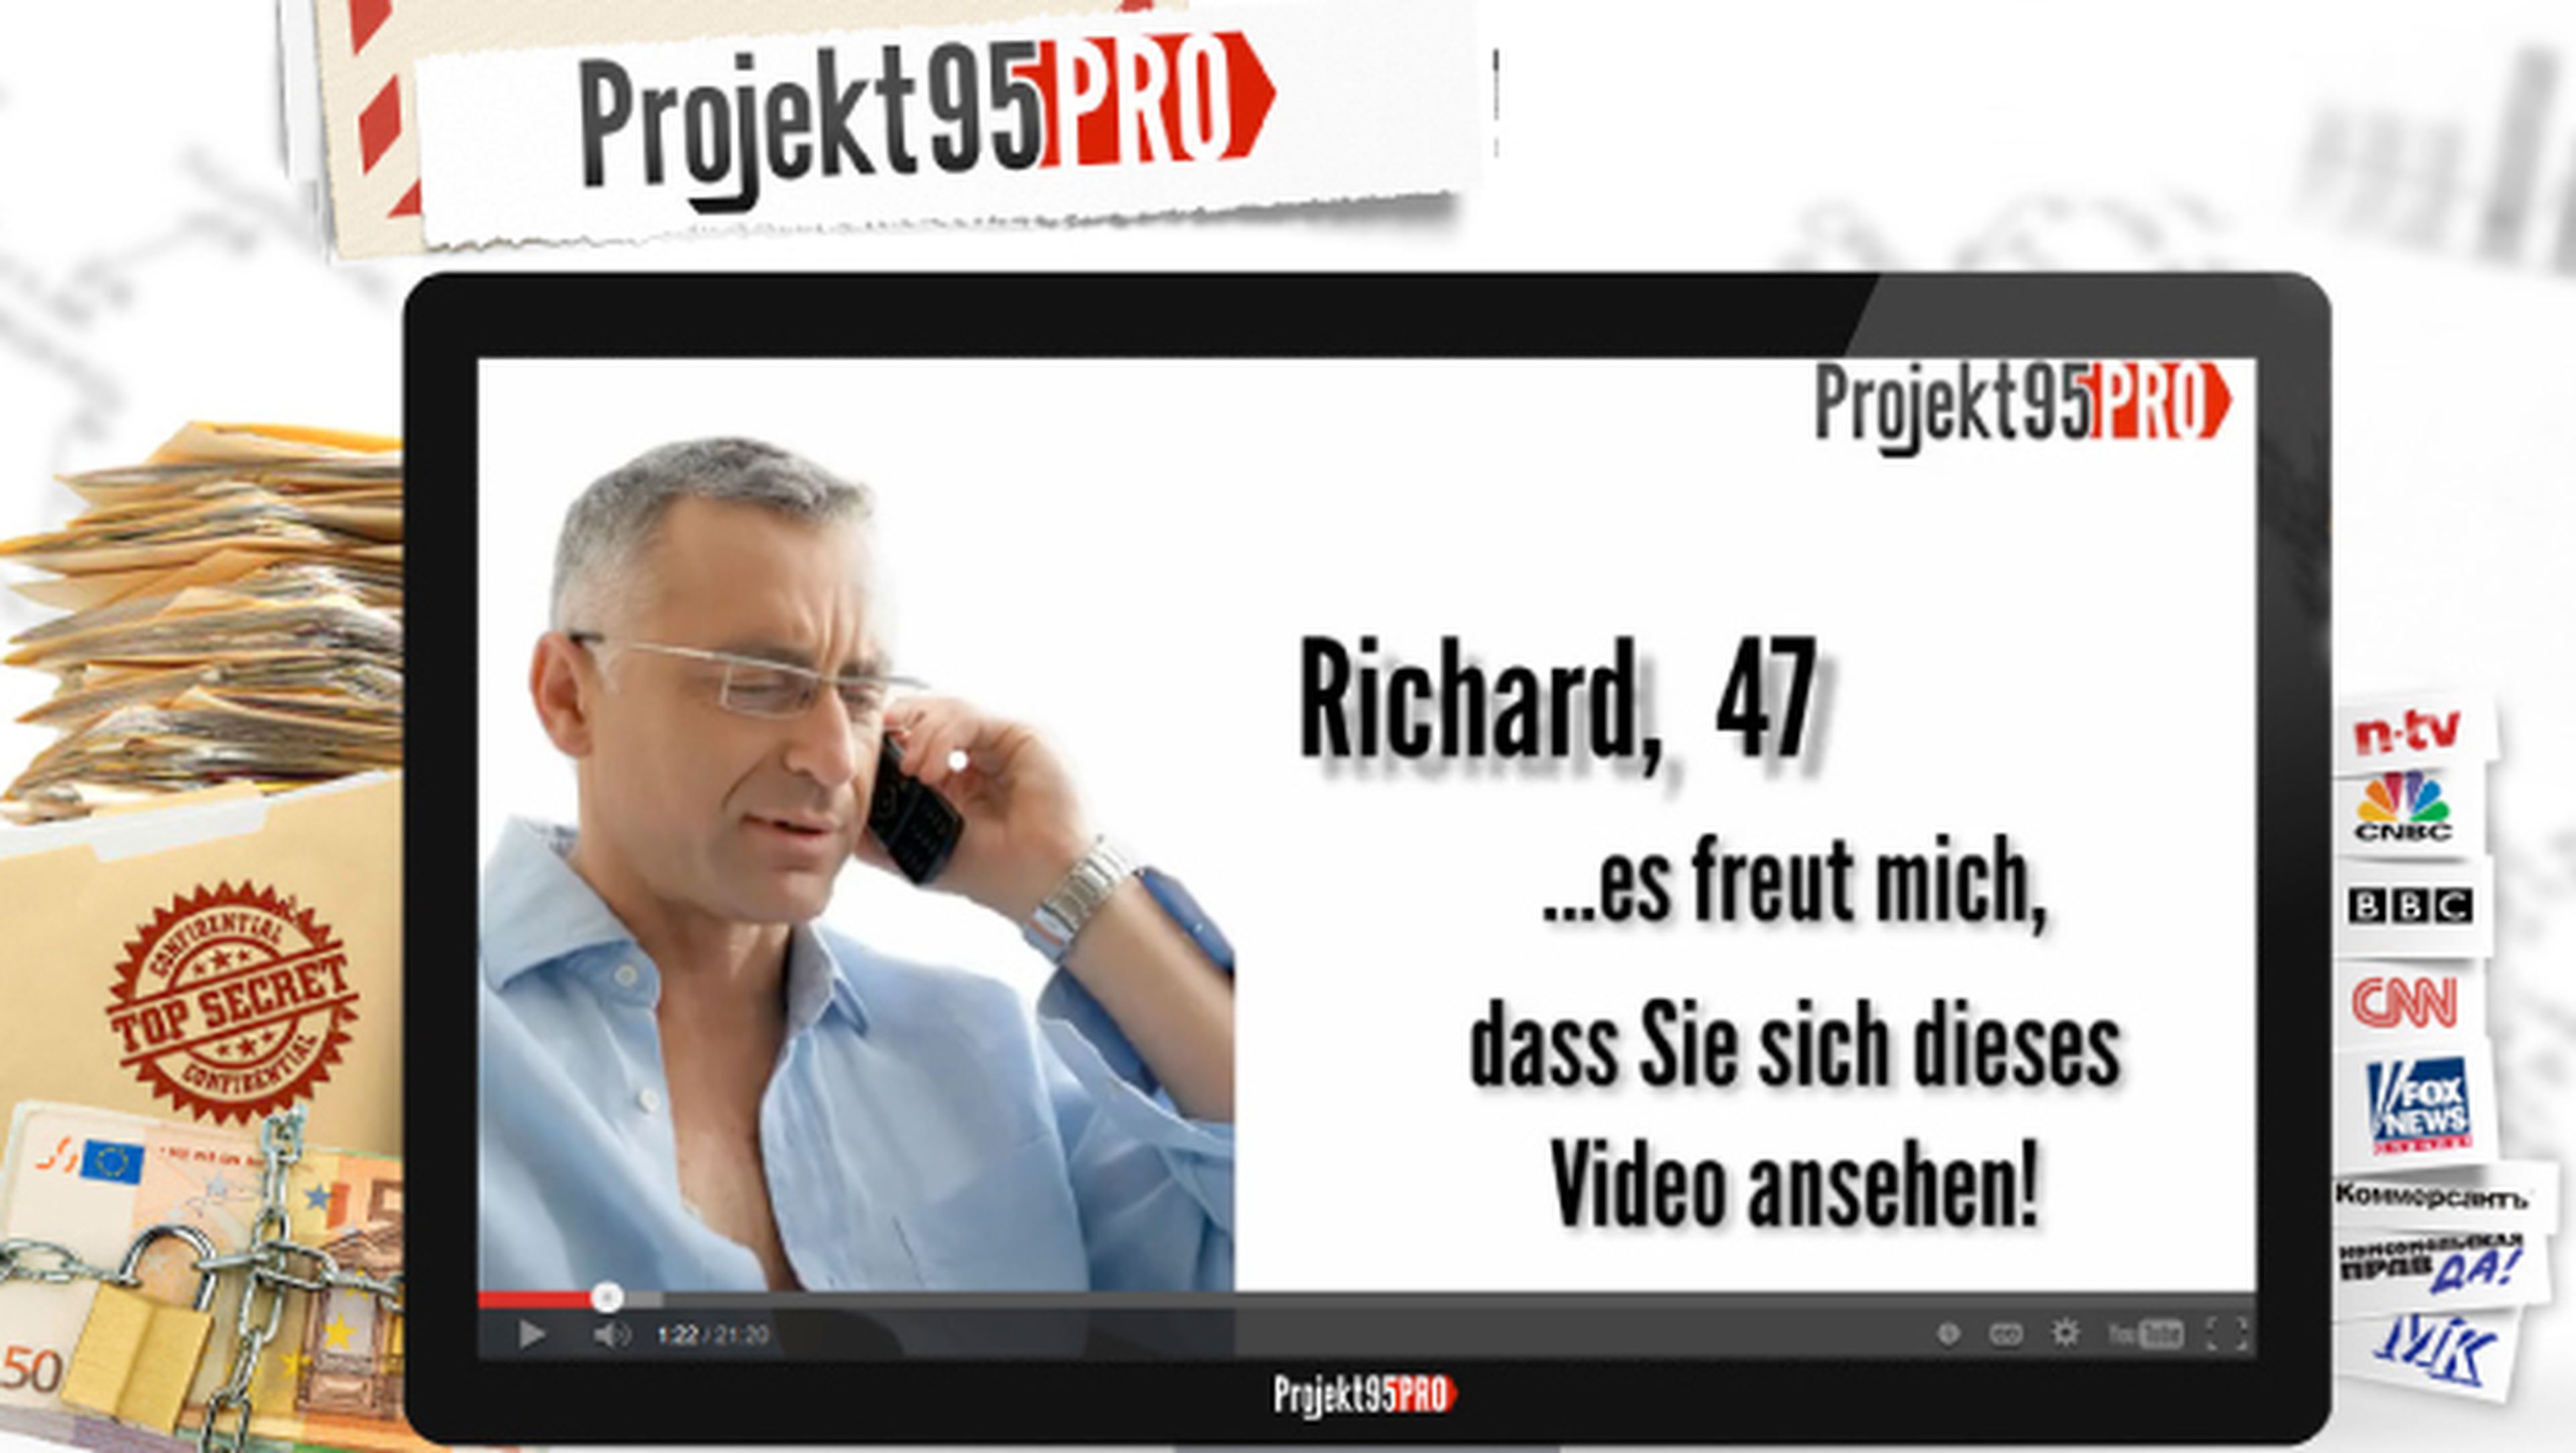 Project95Pro